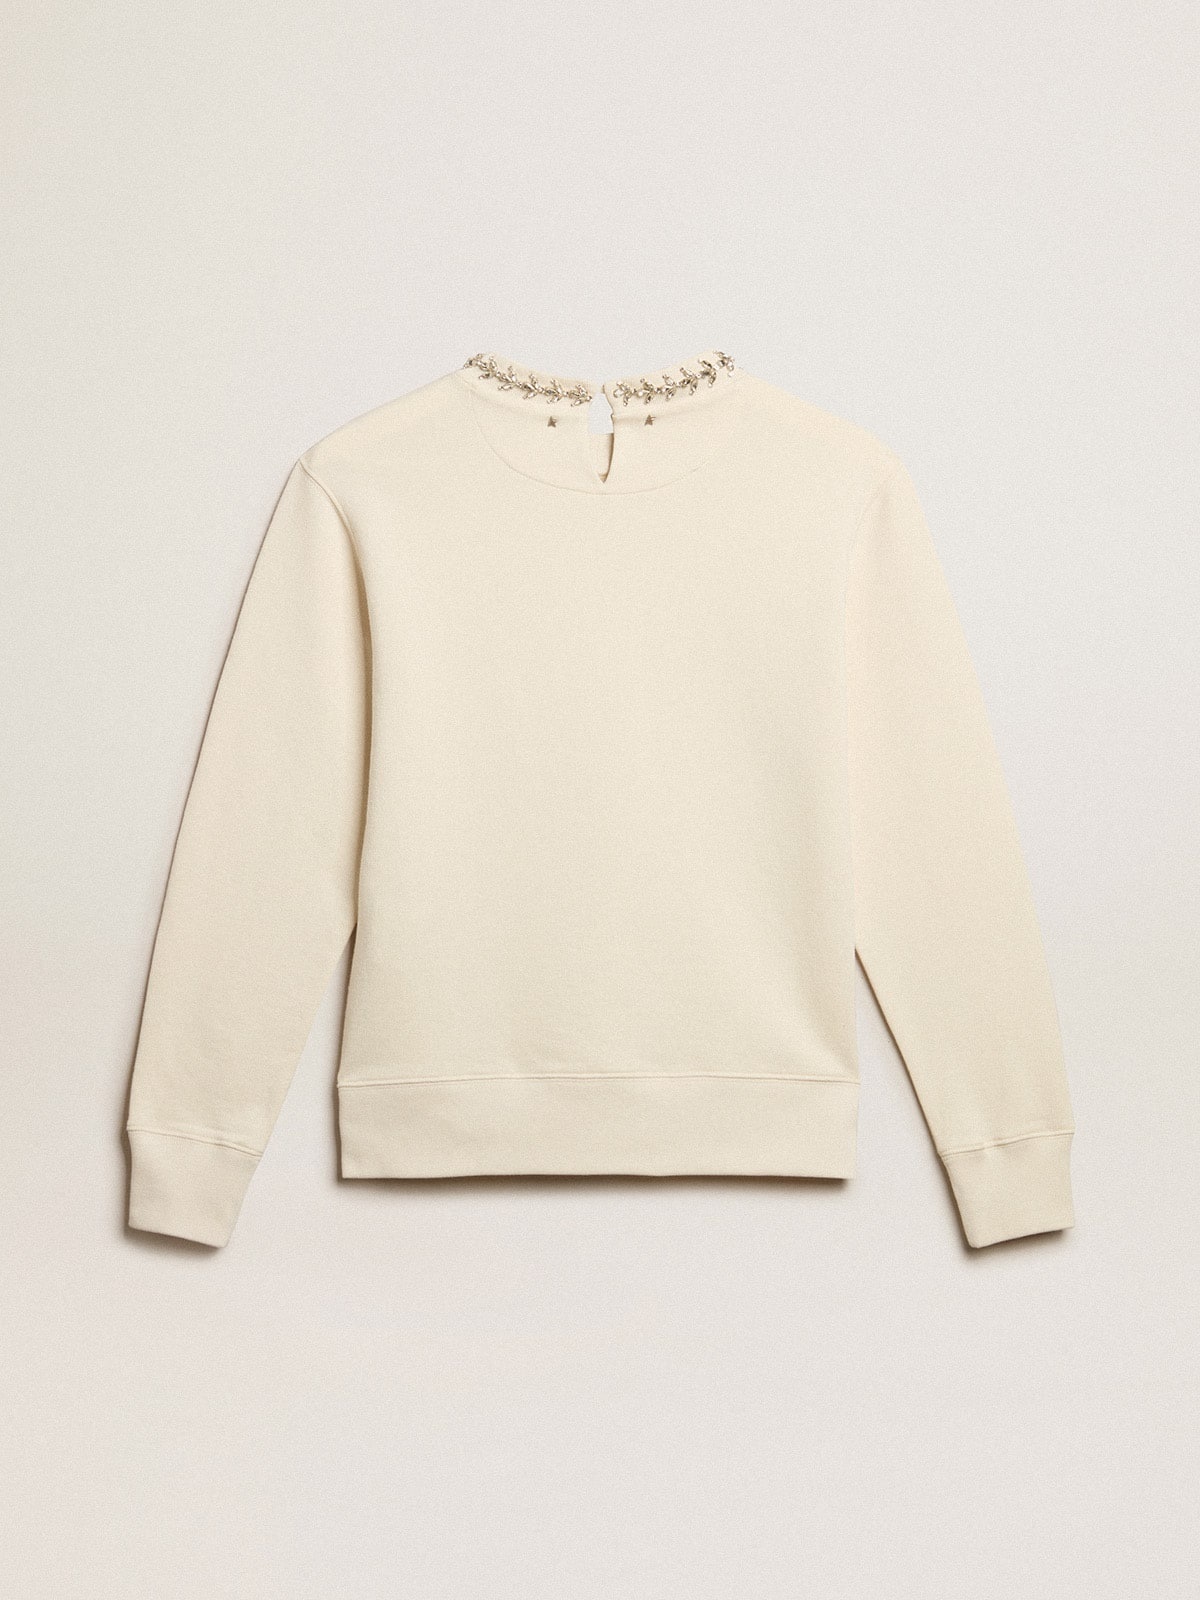 Round-neck cotton sweatshirt in aged white with hand-applied crystals - 5